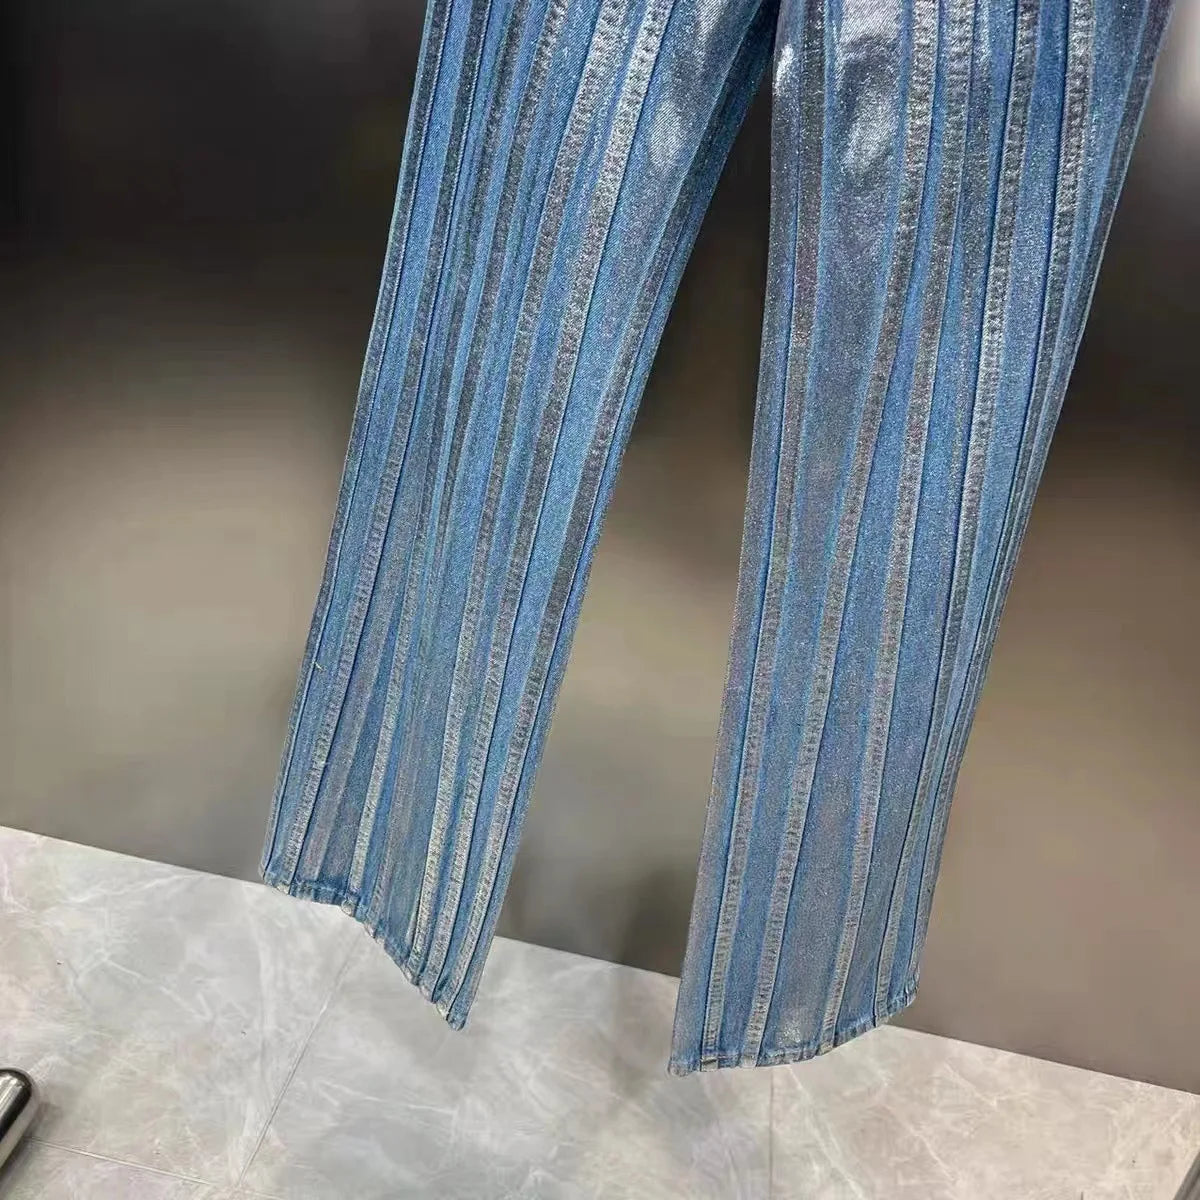 Silver Striped Blue Loose Denim Pants